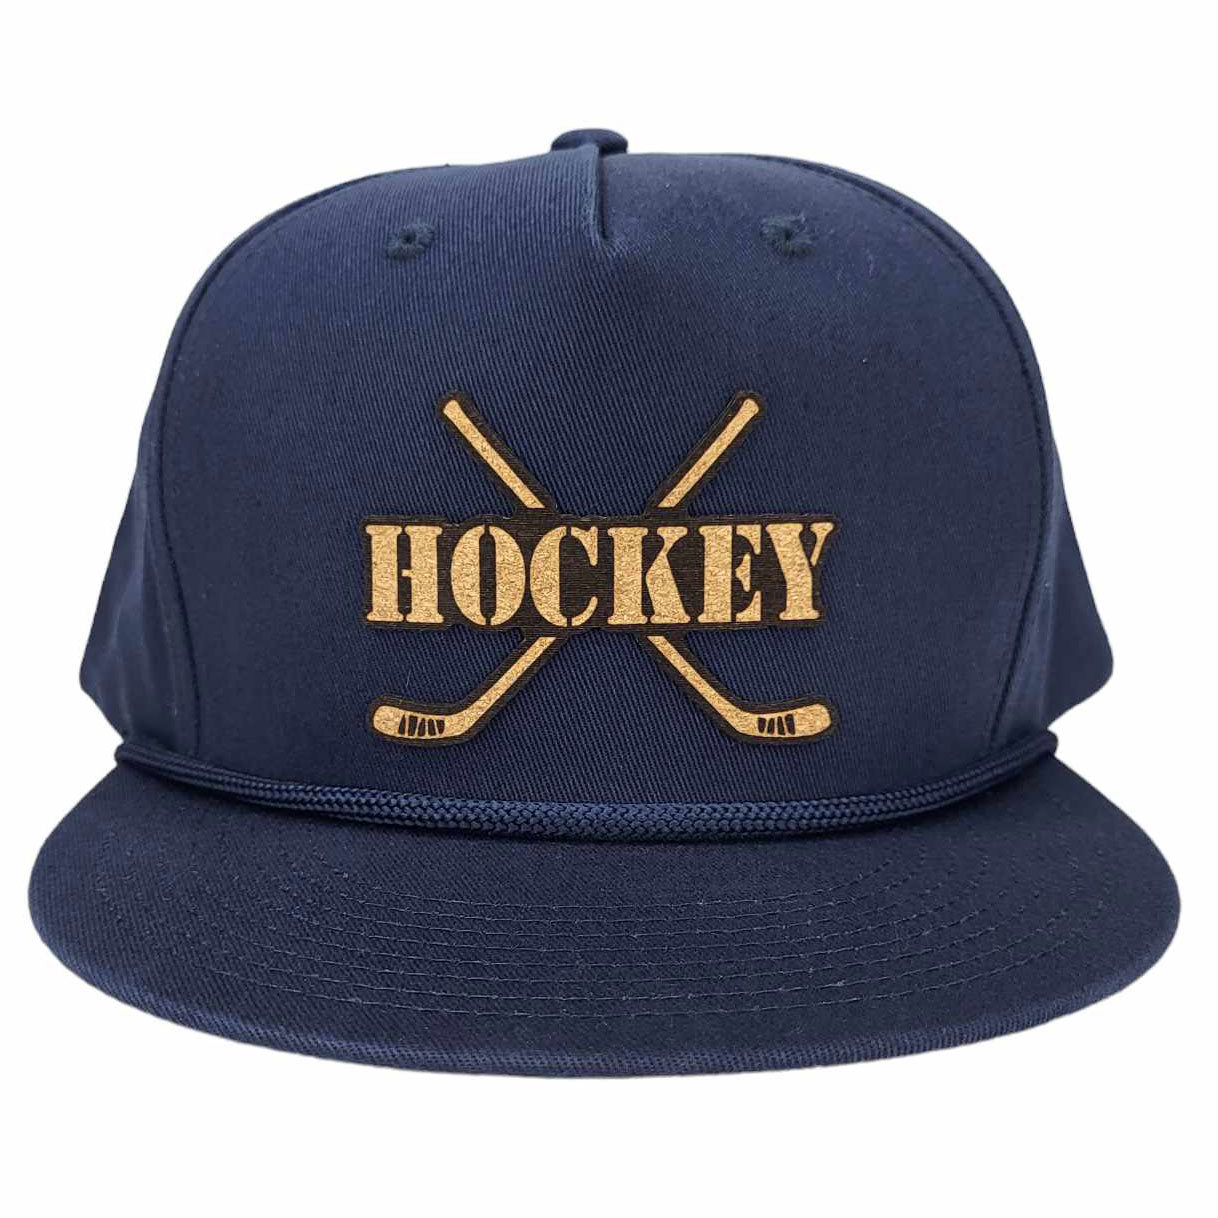 The Hockey Rope Hat